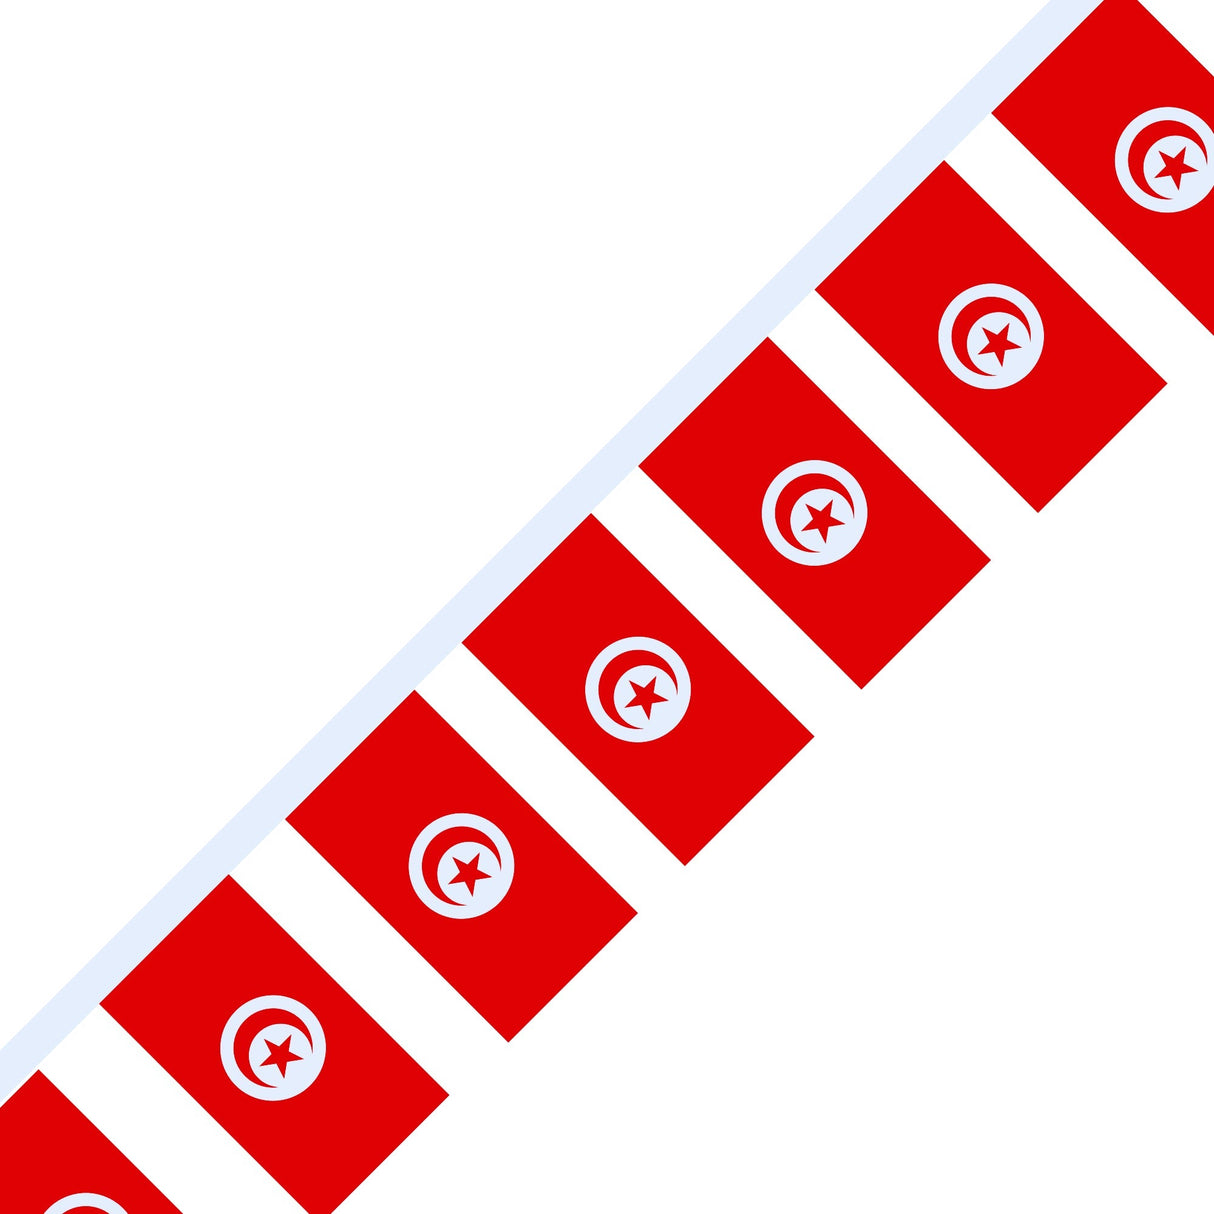 Flag Garland of Tunisia - Pixelforma